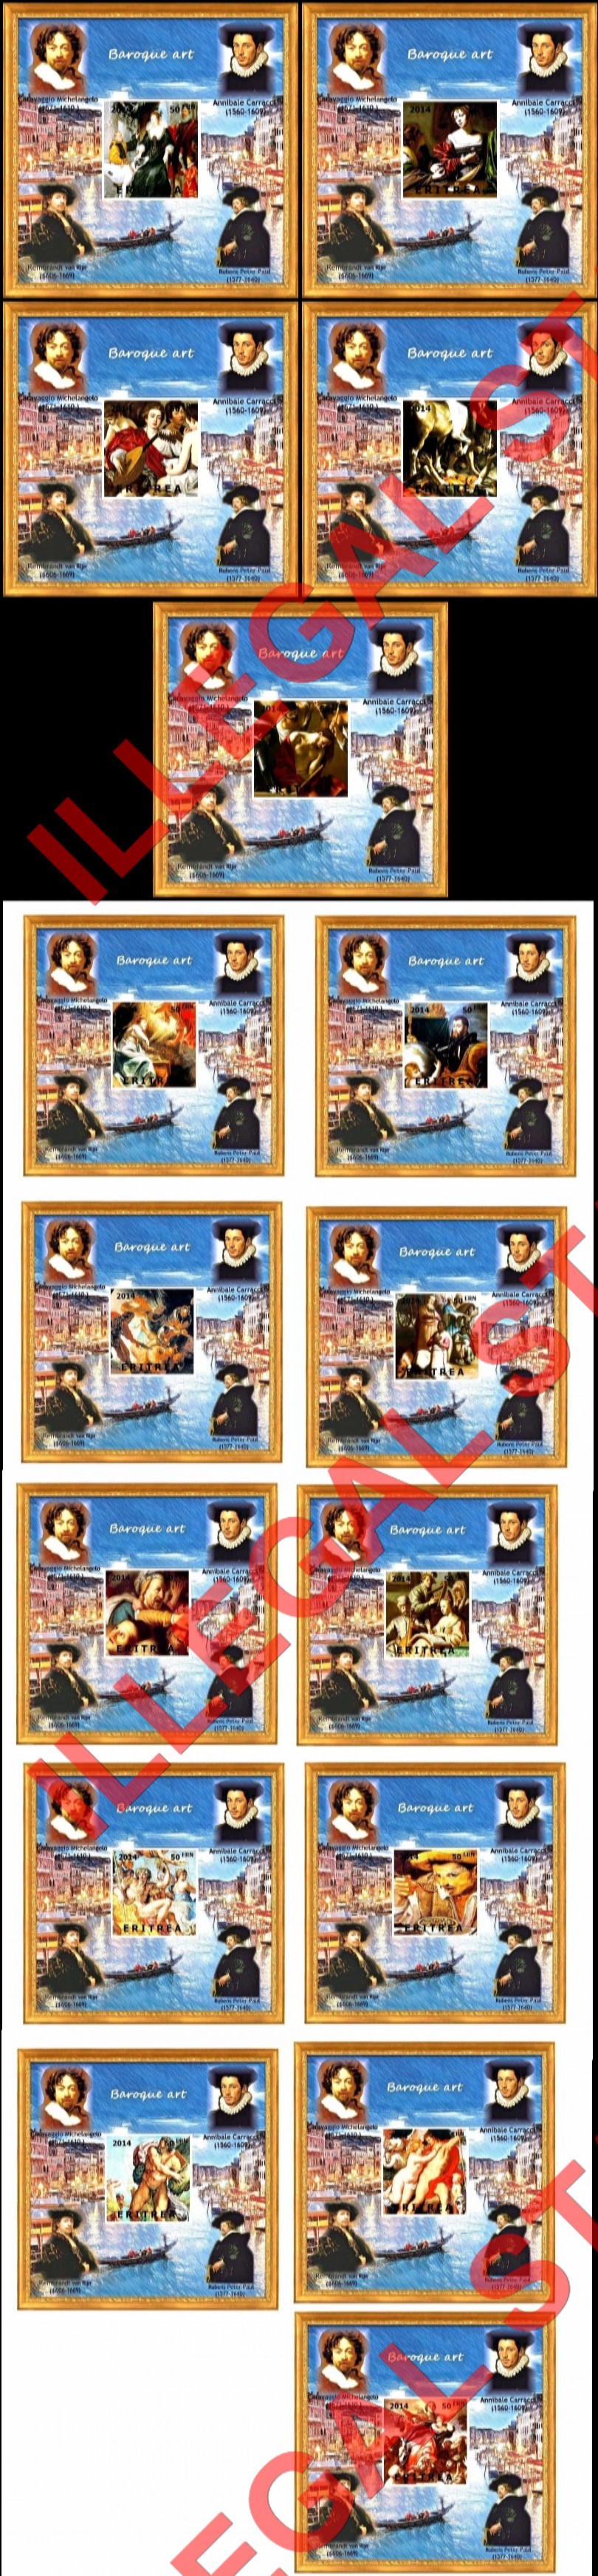 Eritrea 2014 Baroque Art Counterfeit Illegal Stamp Souvenir Sheets of 1